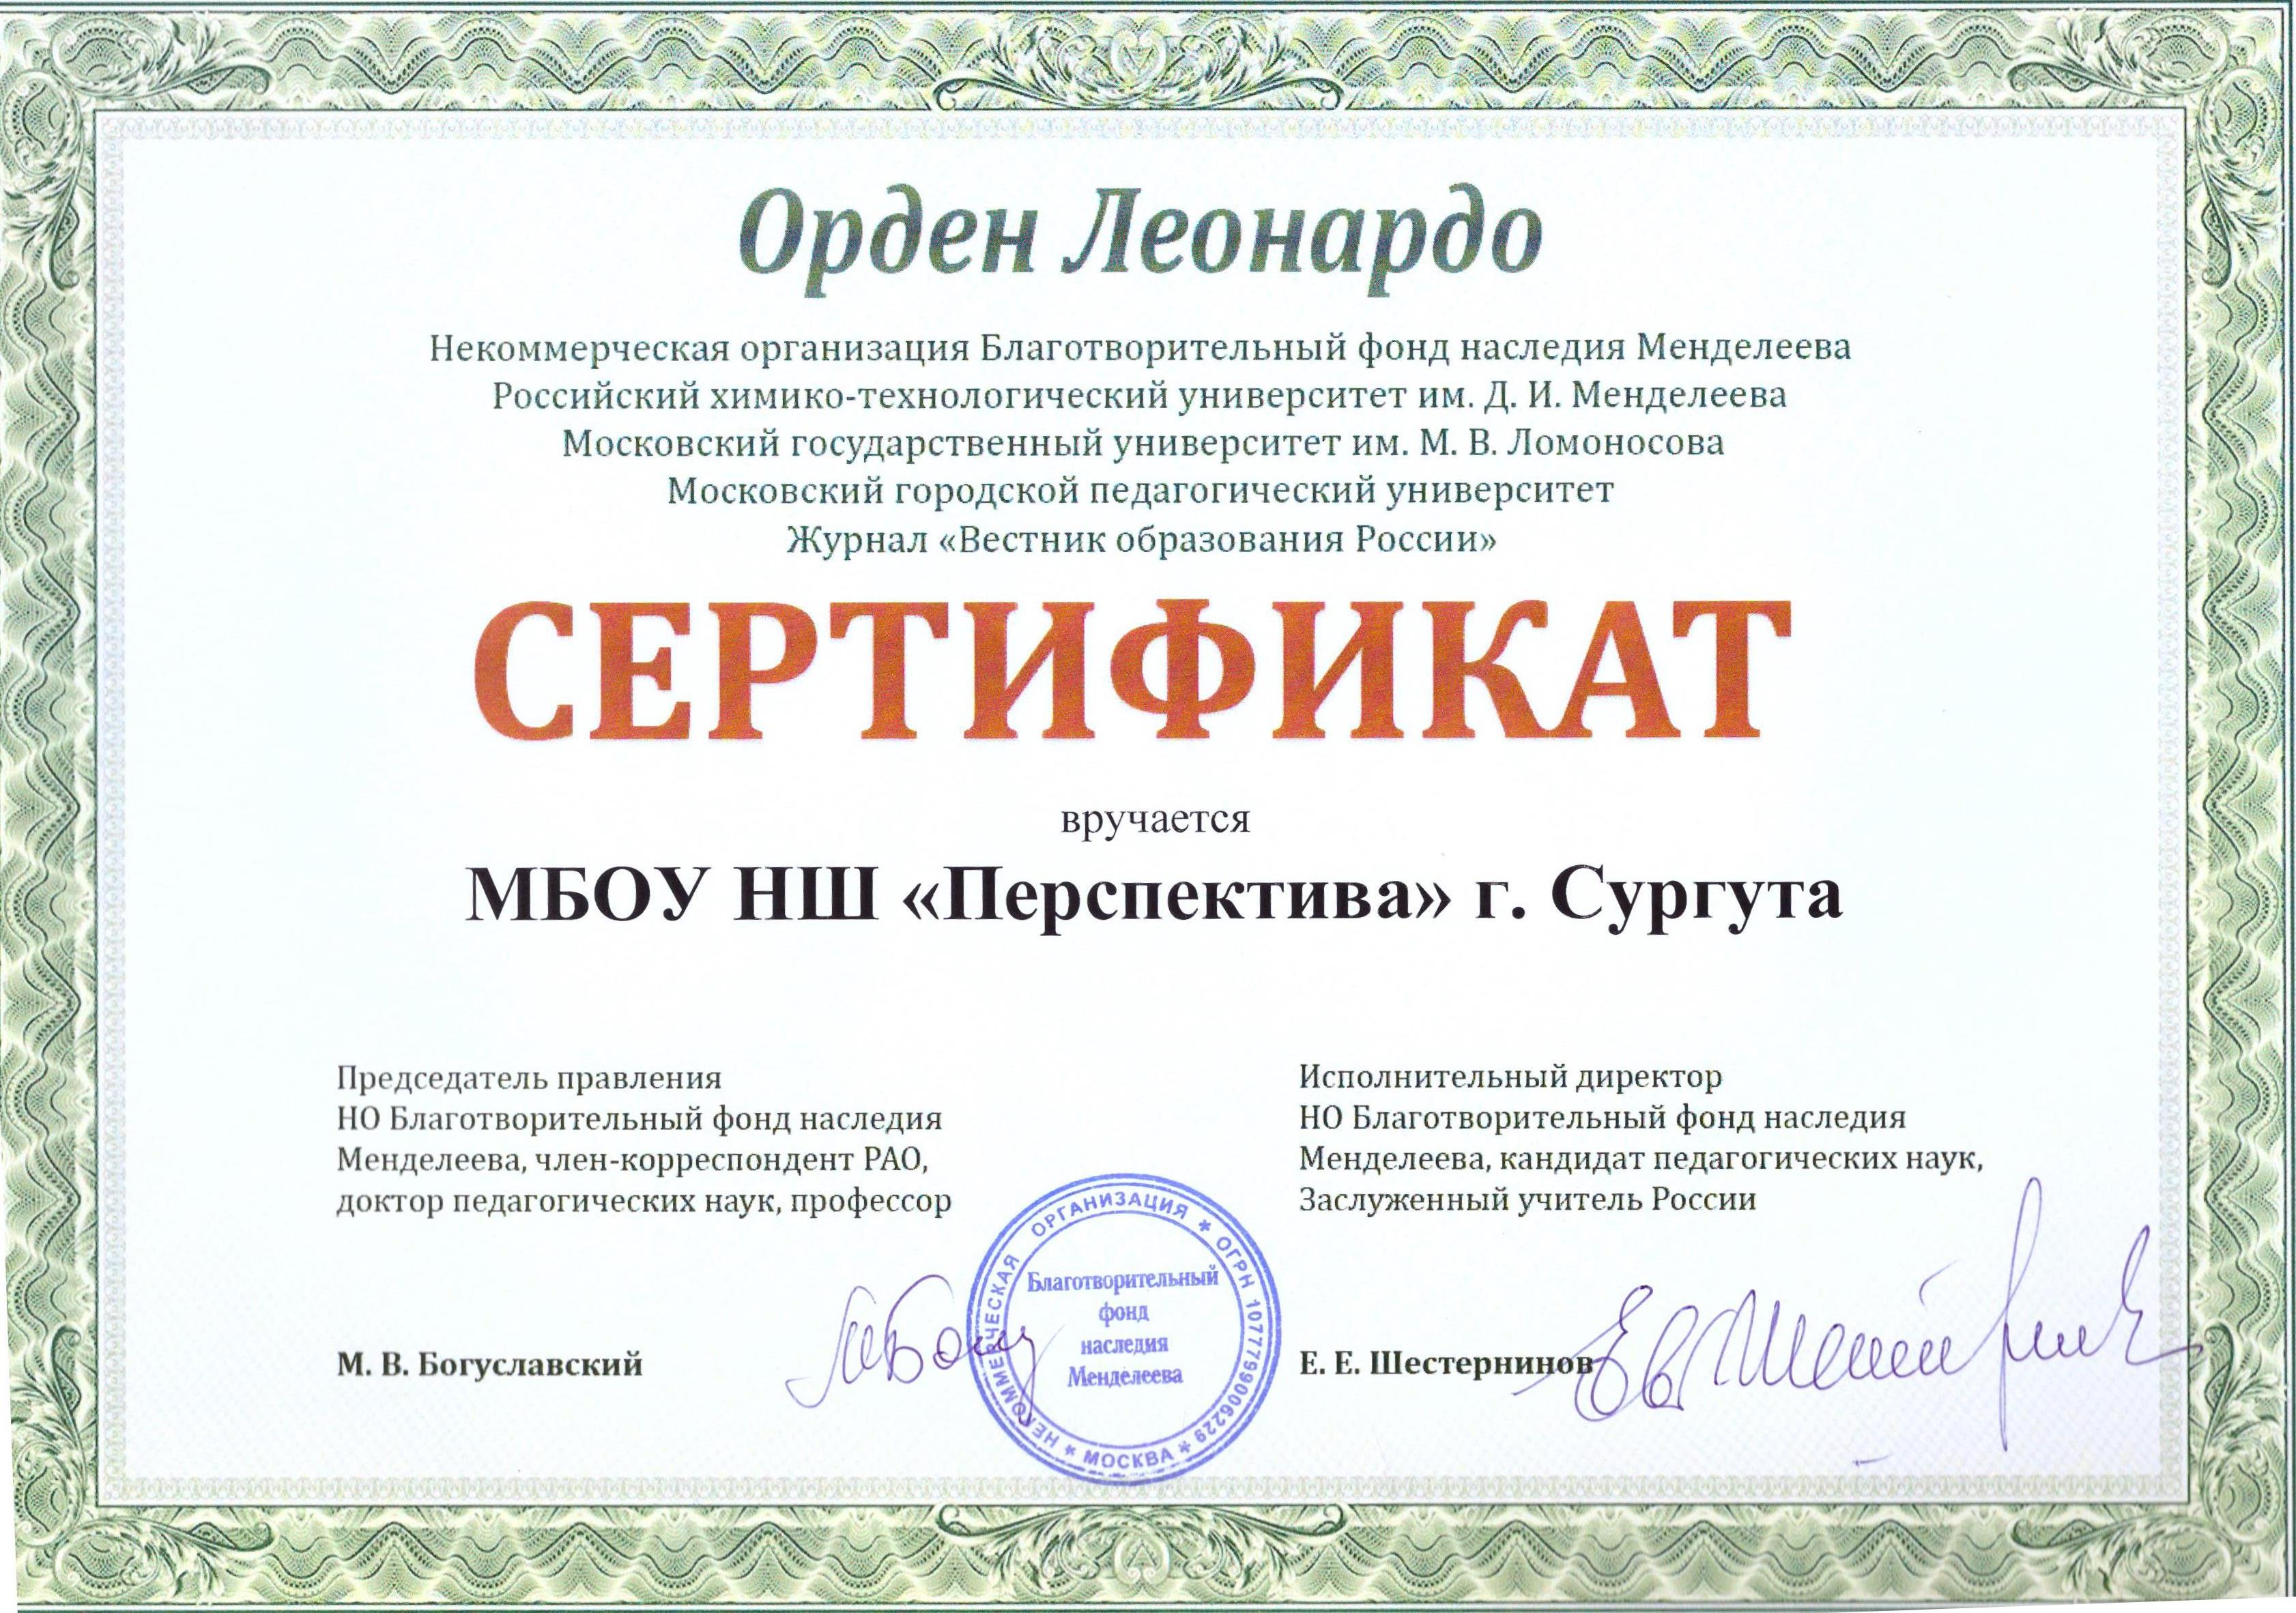 Сертификат Леонардо 001